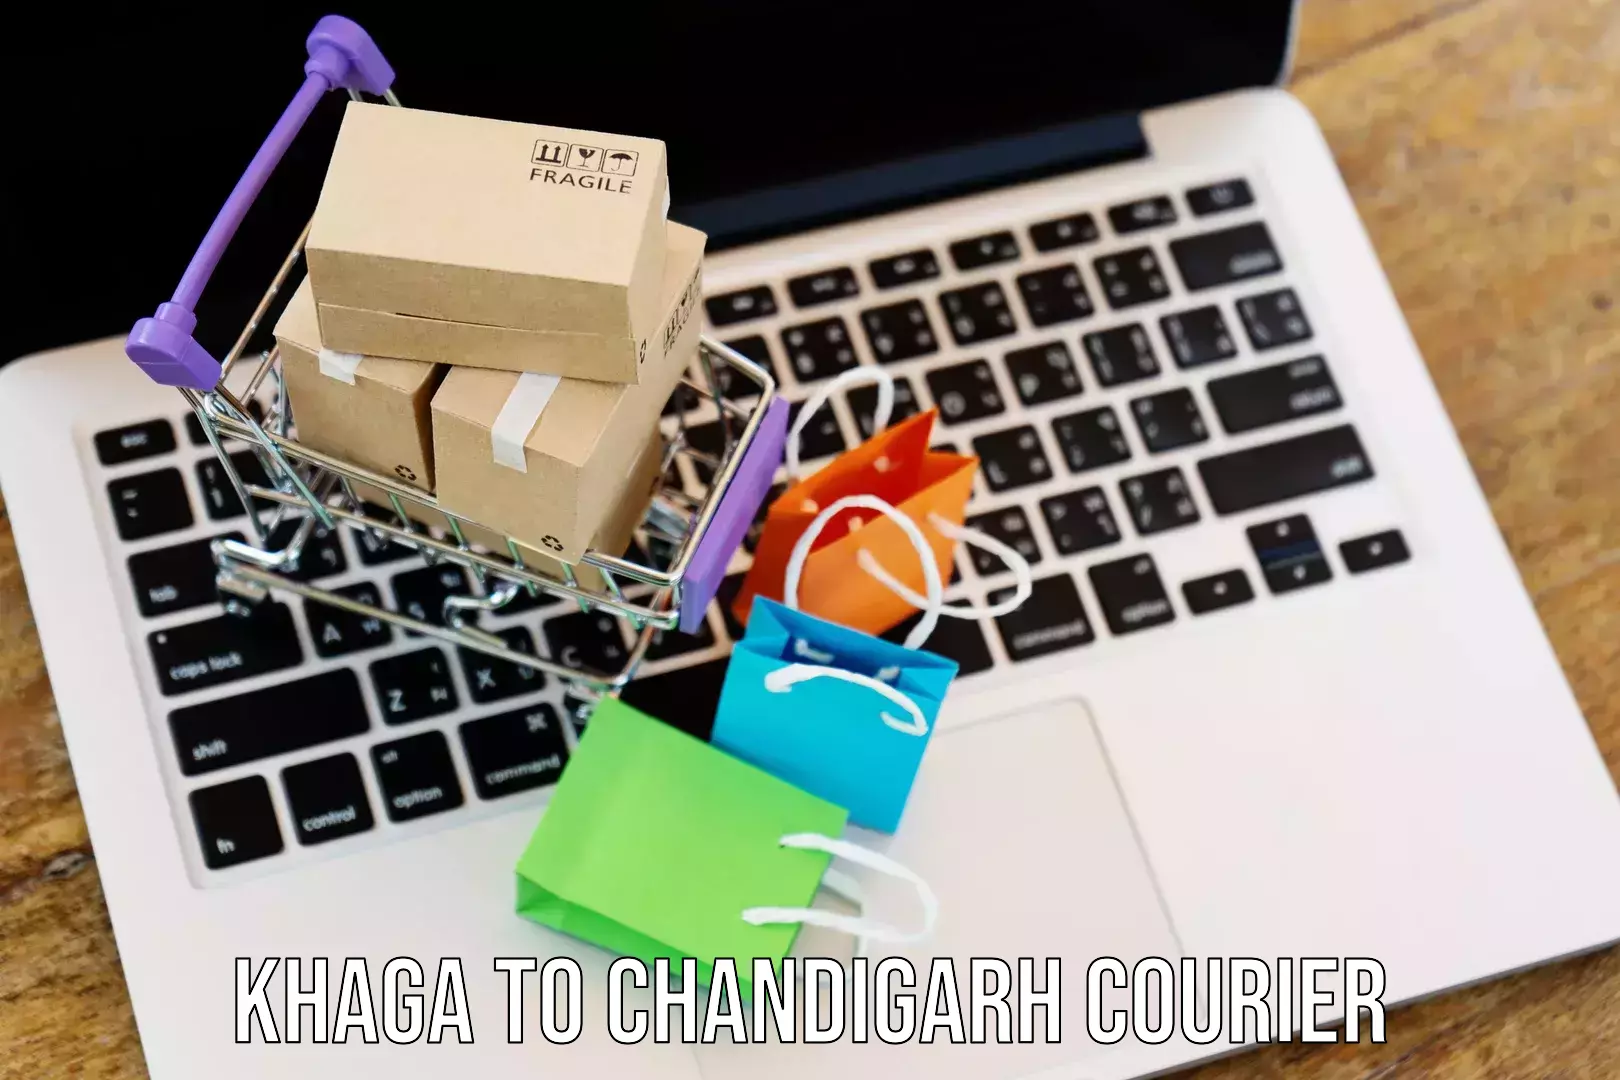 Courier service partnerships Khaga to Chandigarh